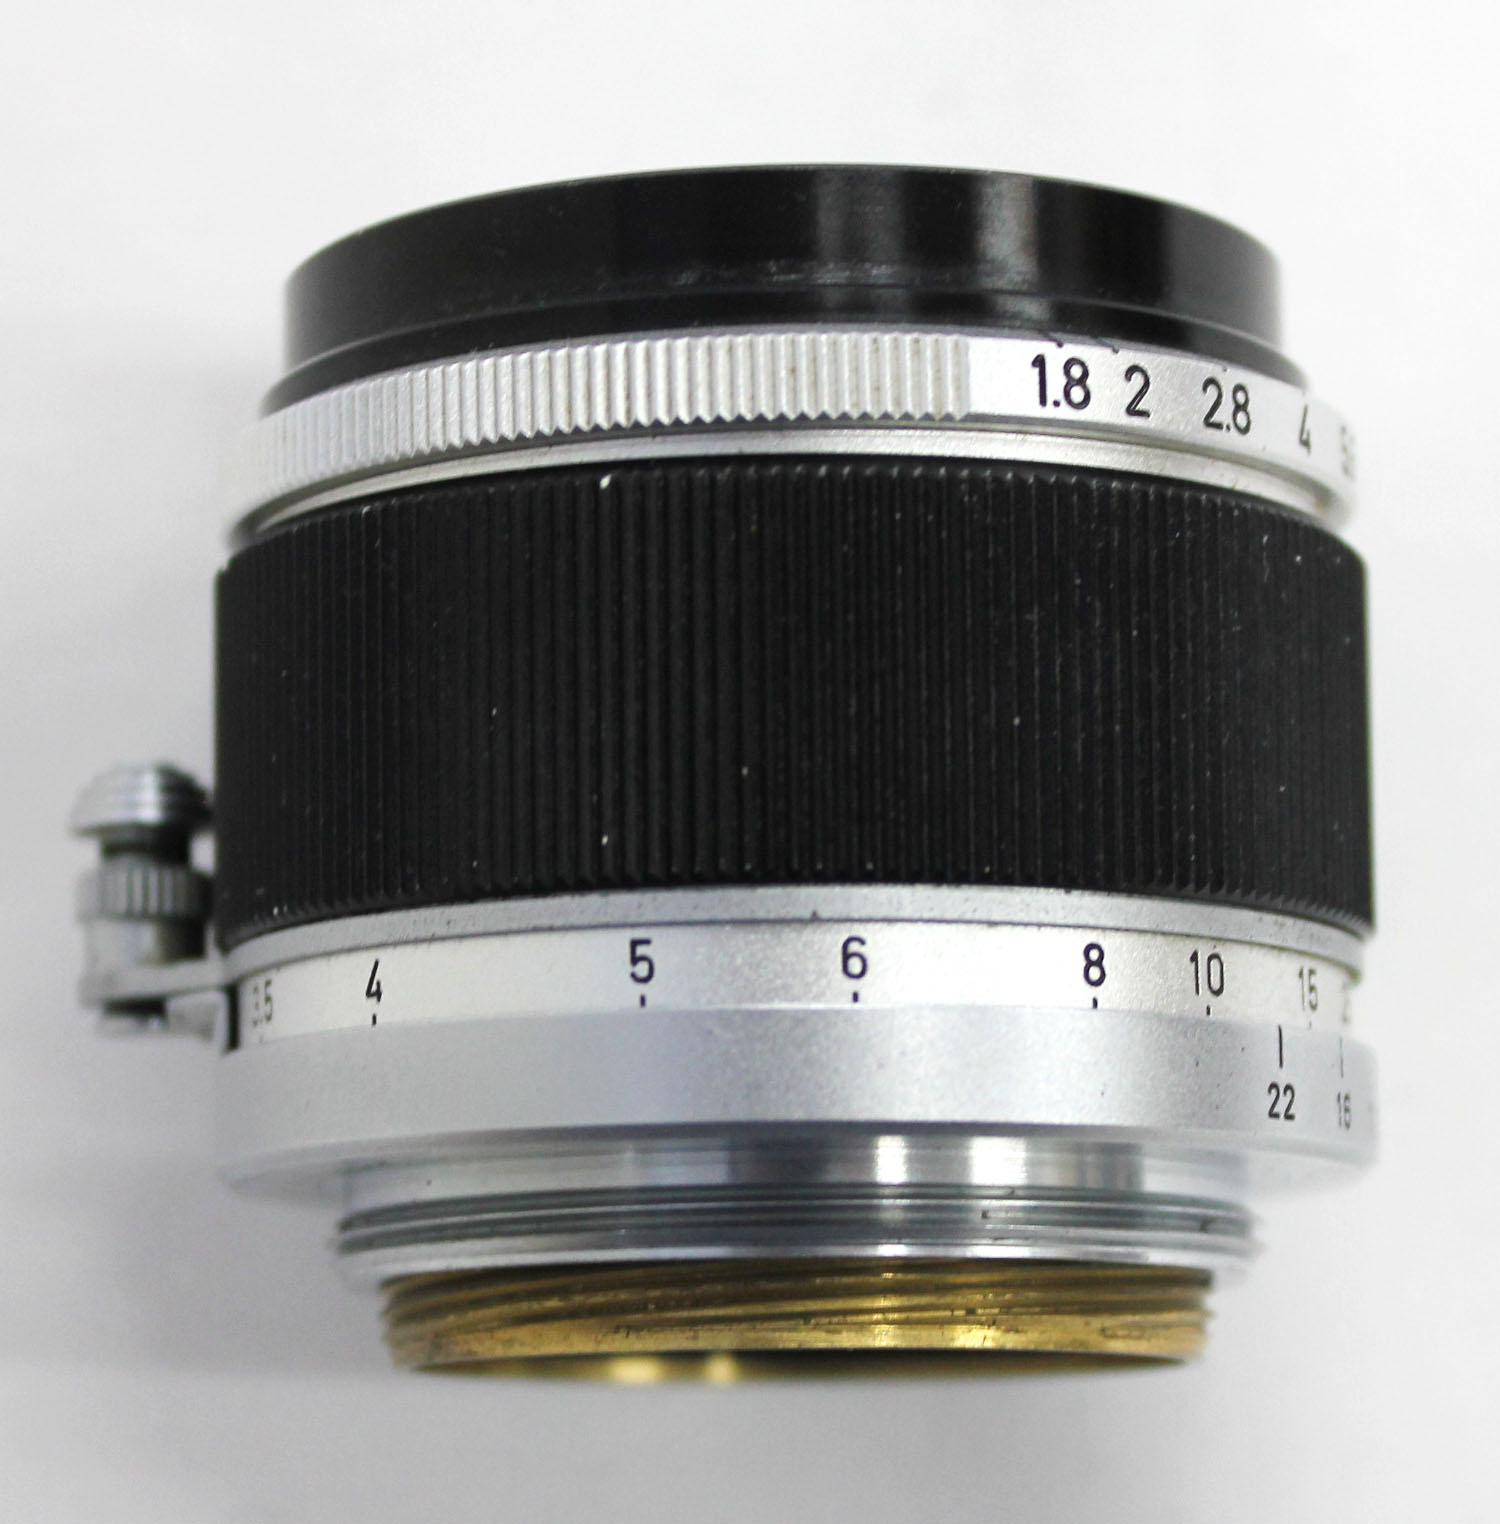 Canon L1 Rangefinder Camera Leica L39 LTM Screw Mount w/ Bonus Lens 50mm F/1.8 from Japan Photo 16